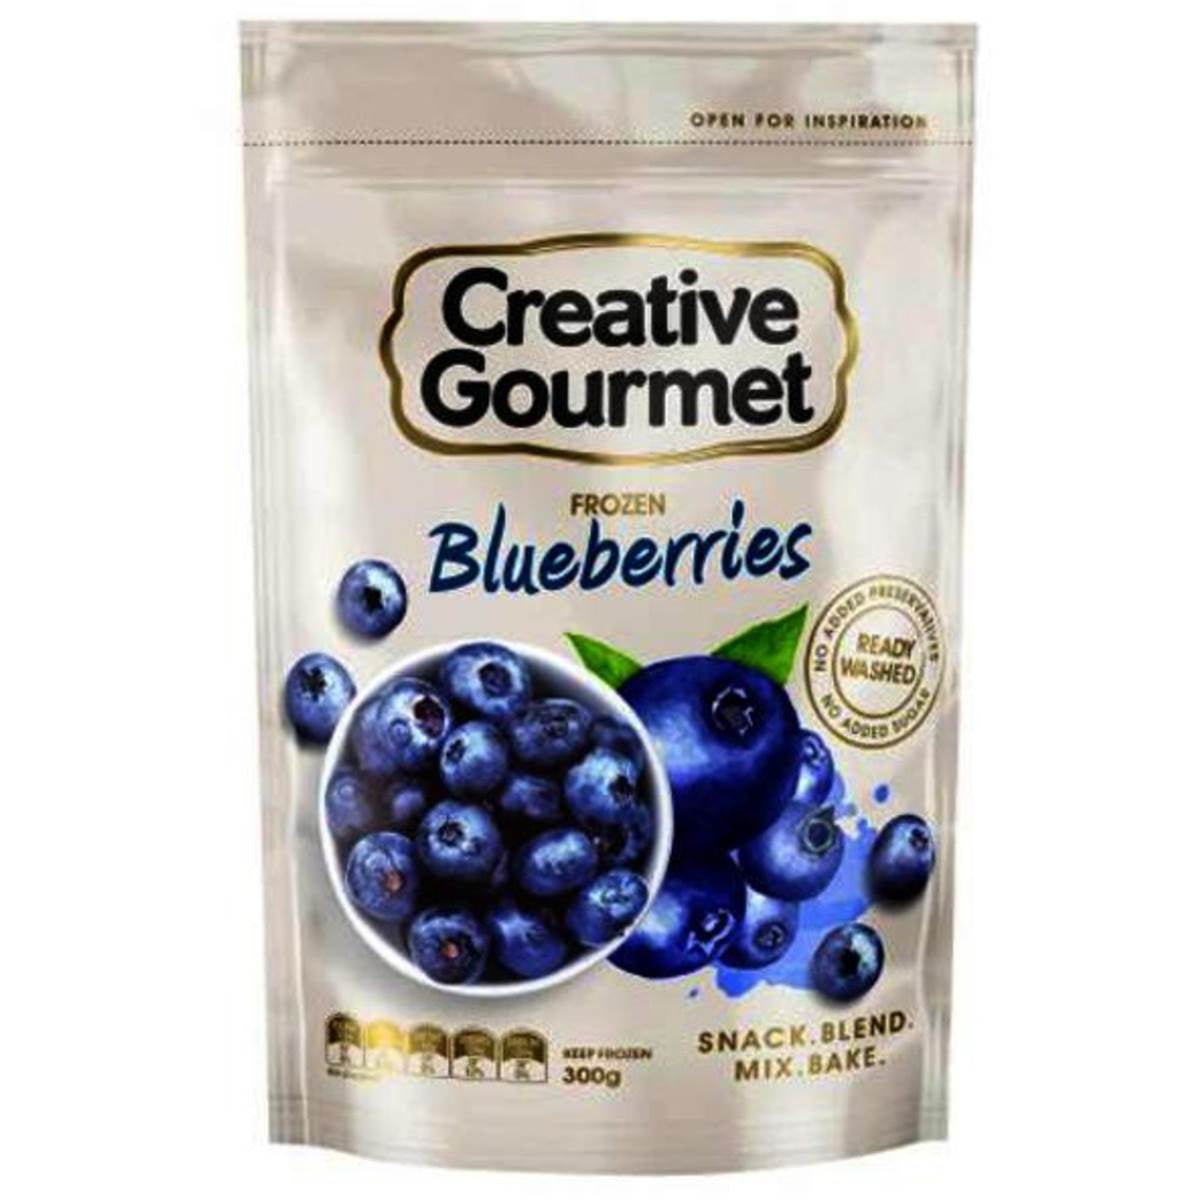 Creative Gourmet Frozen Blueberries 300g